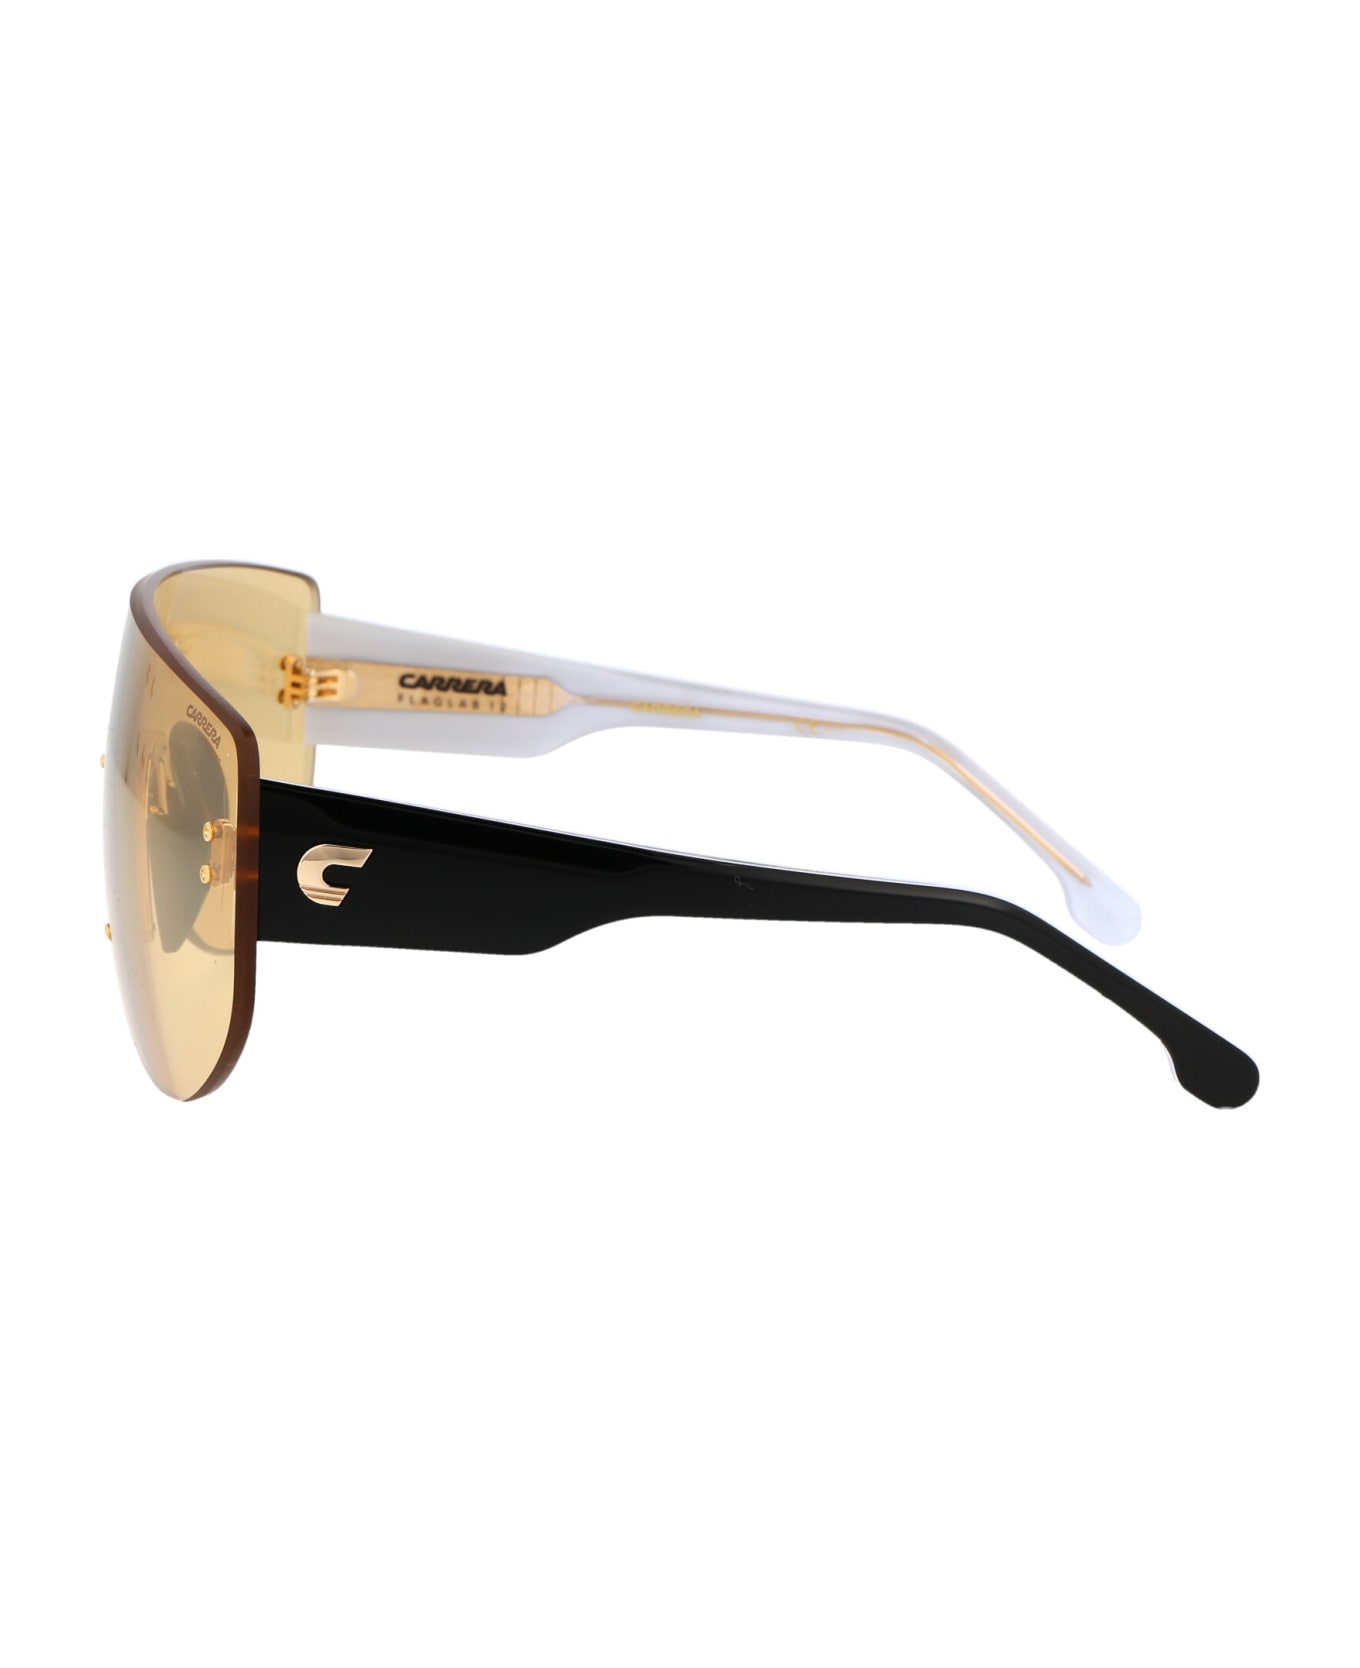 Carrera Flaglab 12 Sunglasses - 4CWET YELLOW BLACK